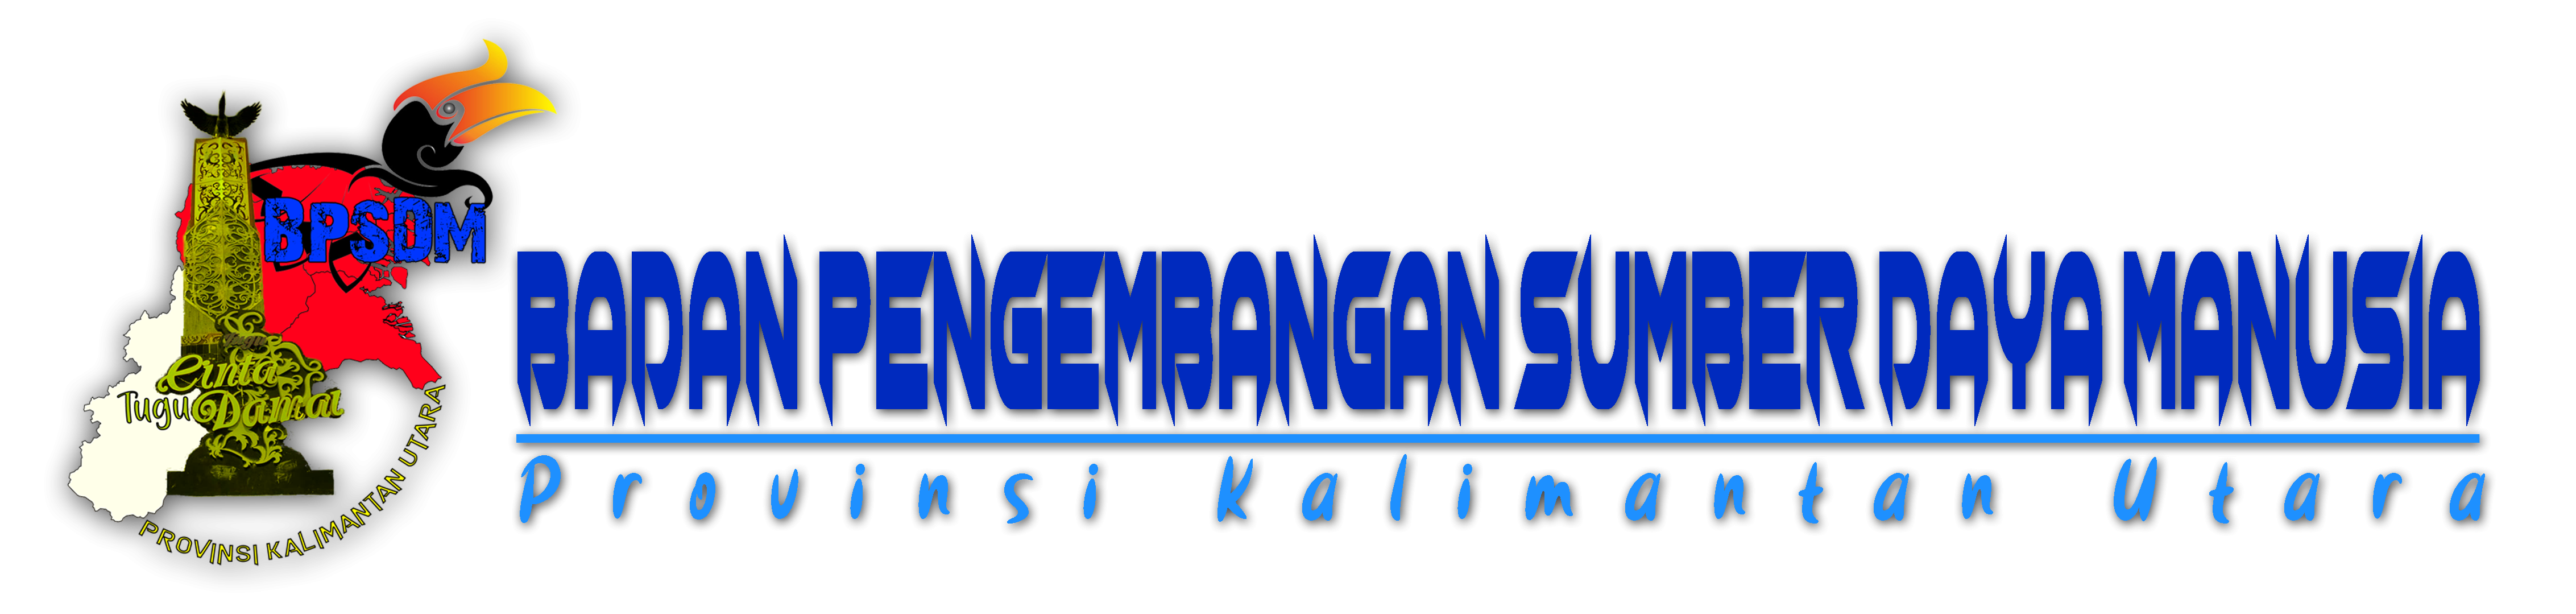 Badan Pengembangan Sumber Daya Manusia Provinsi Kalimantan Utara